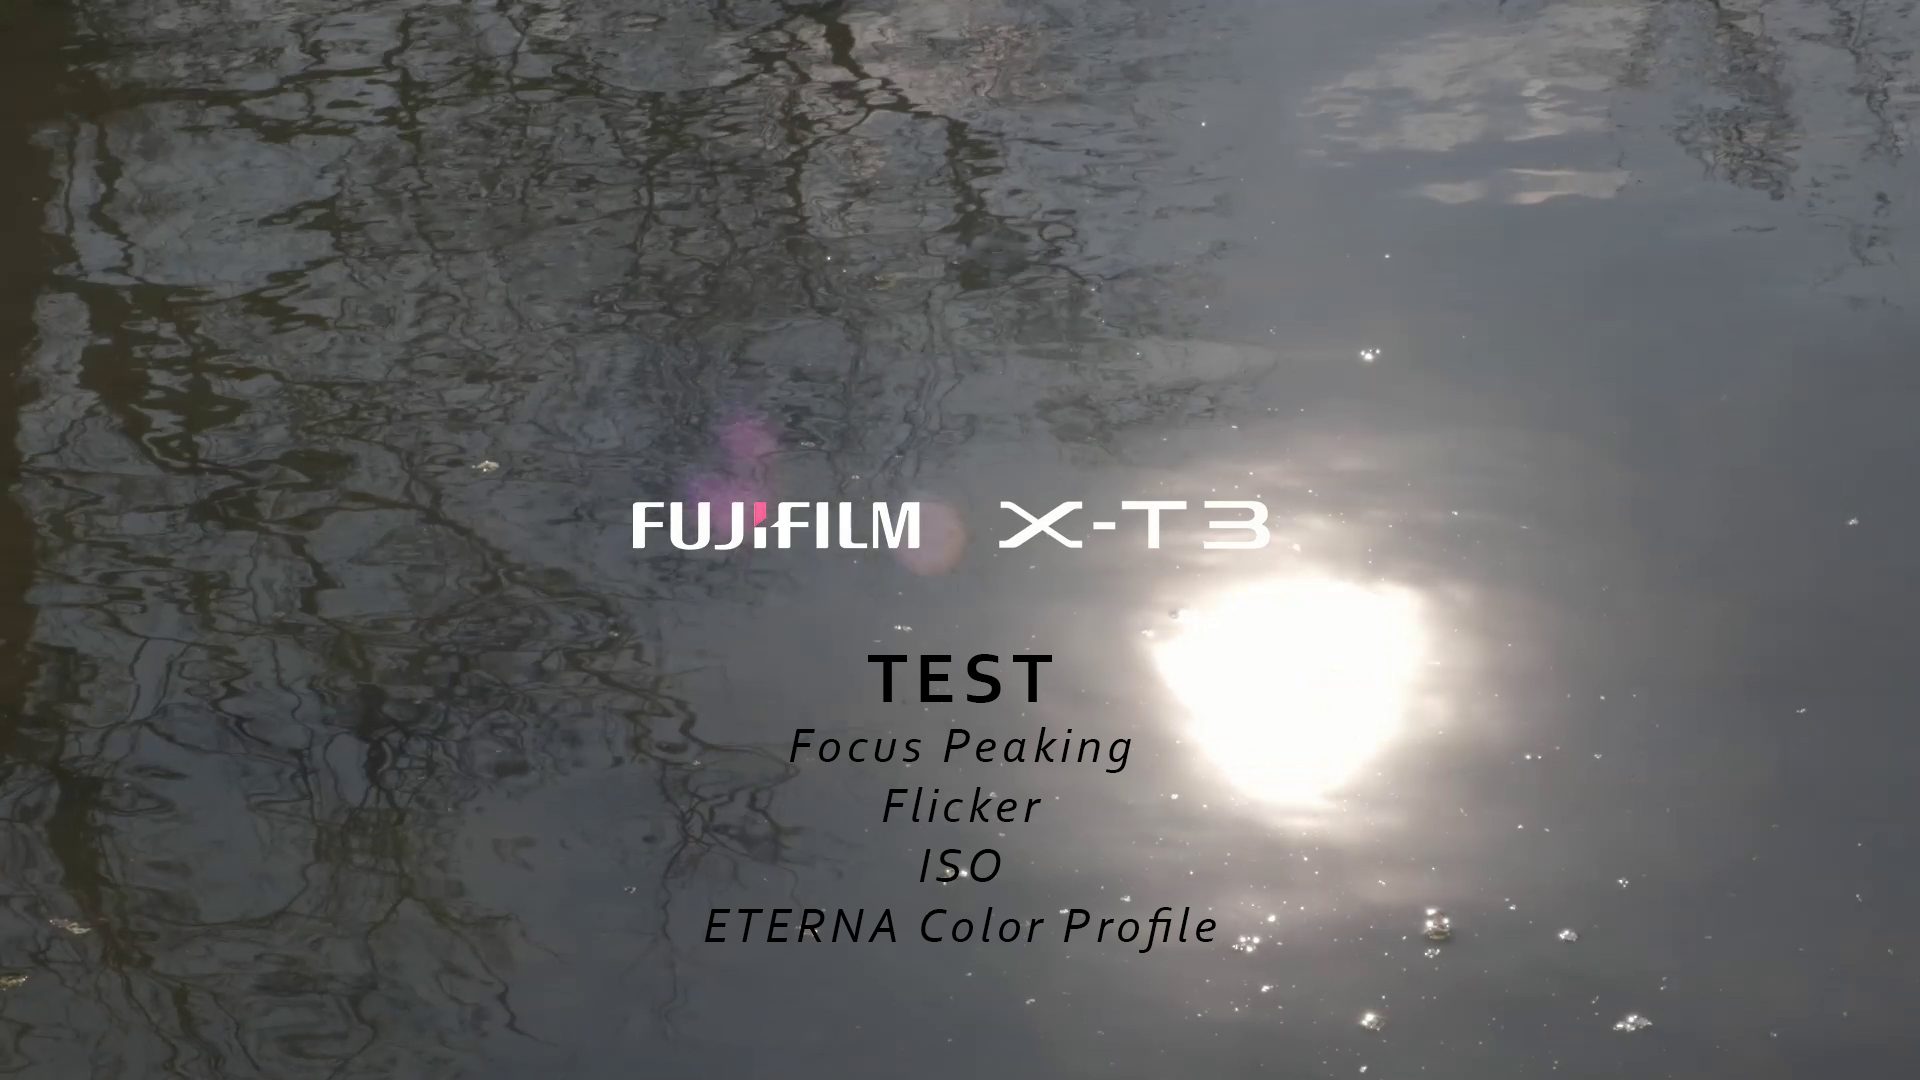  Fujifilm X-T3 | Teste ISO, Focus Peaking, Flicker, Eterna color profile